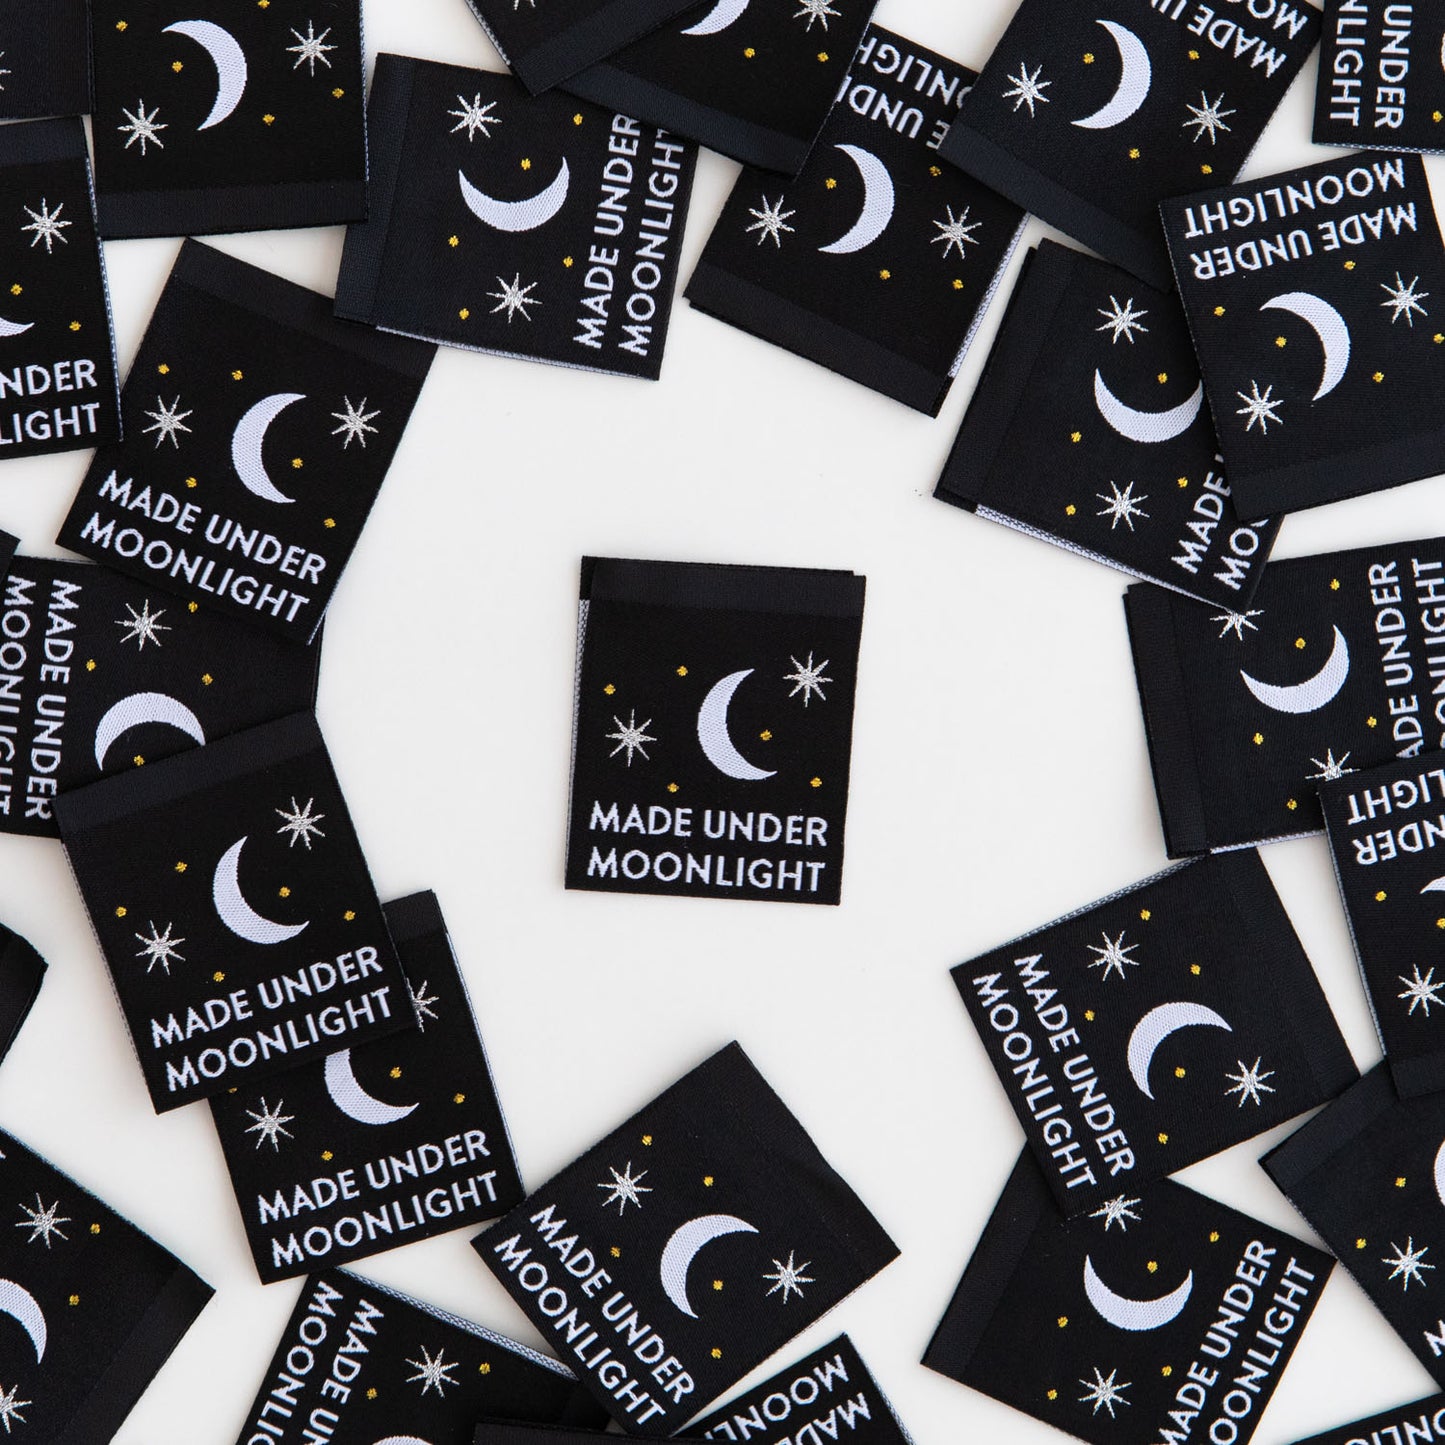 Made Under Moonlight ✿ Quilt Labels